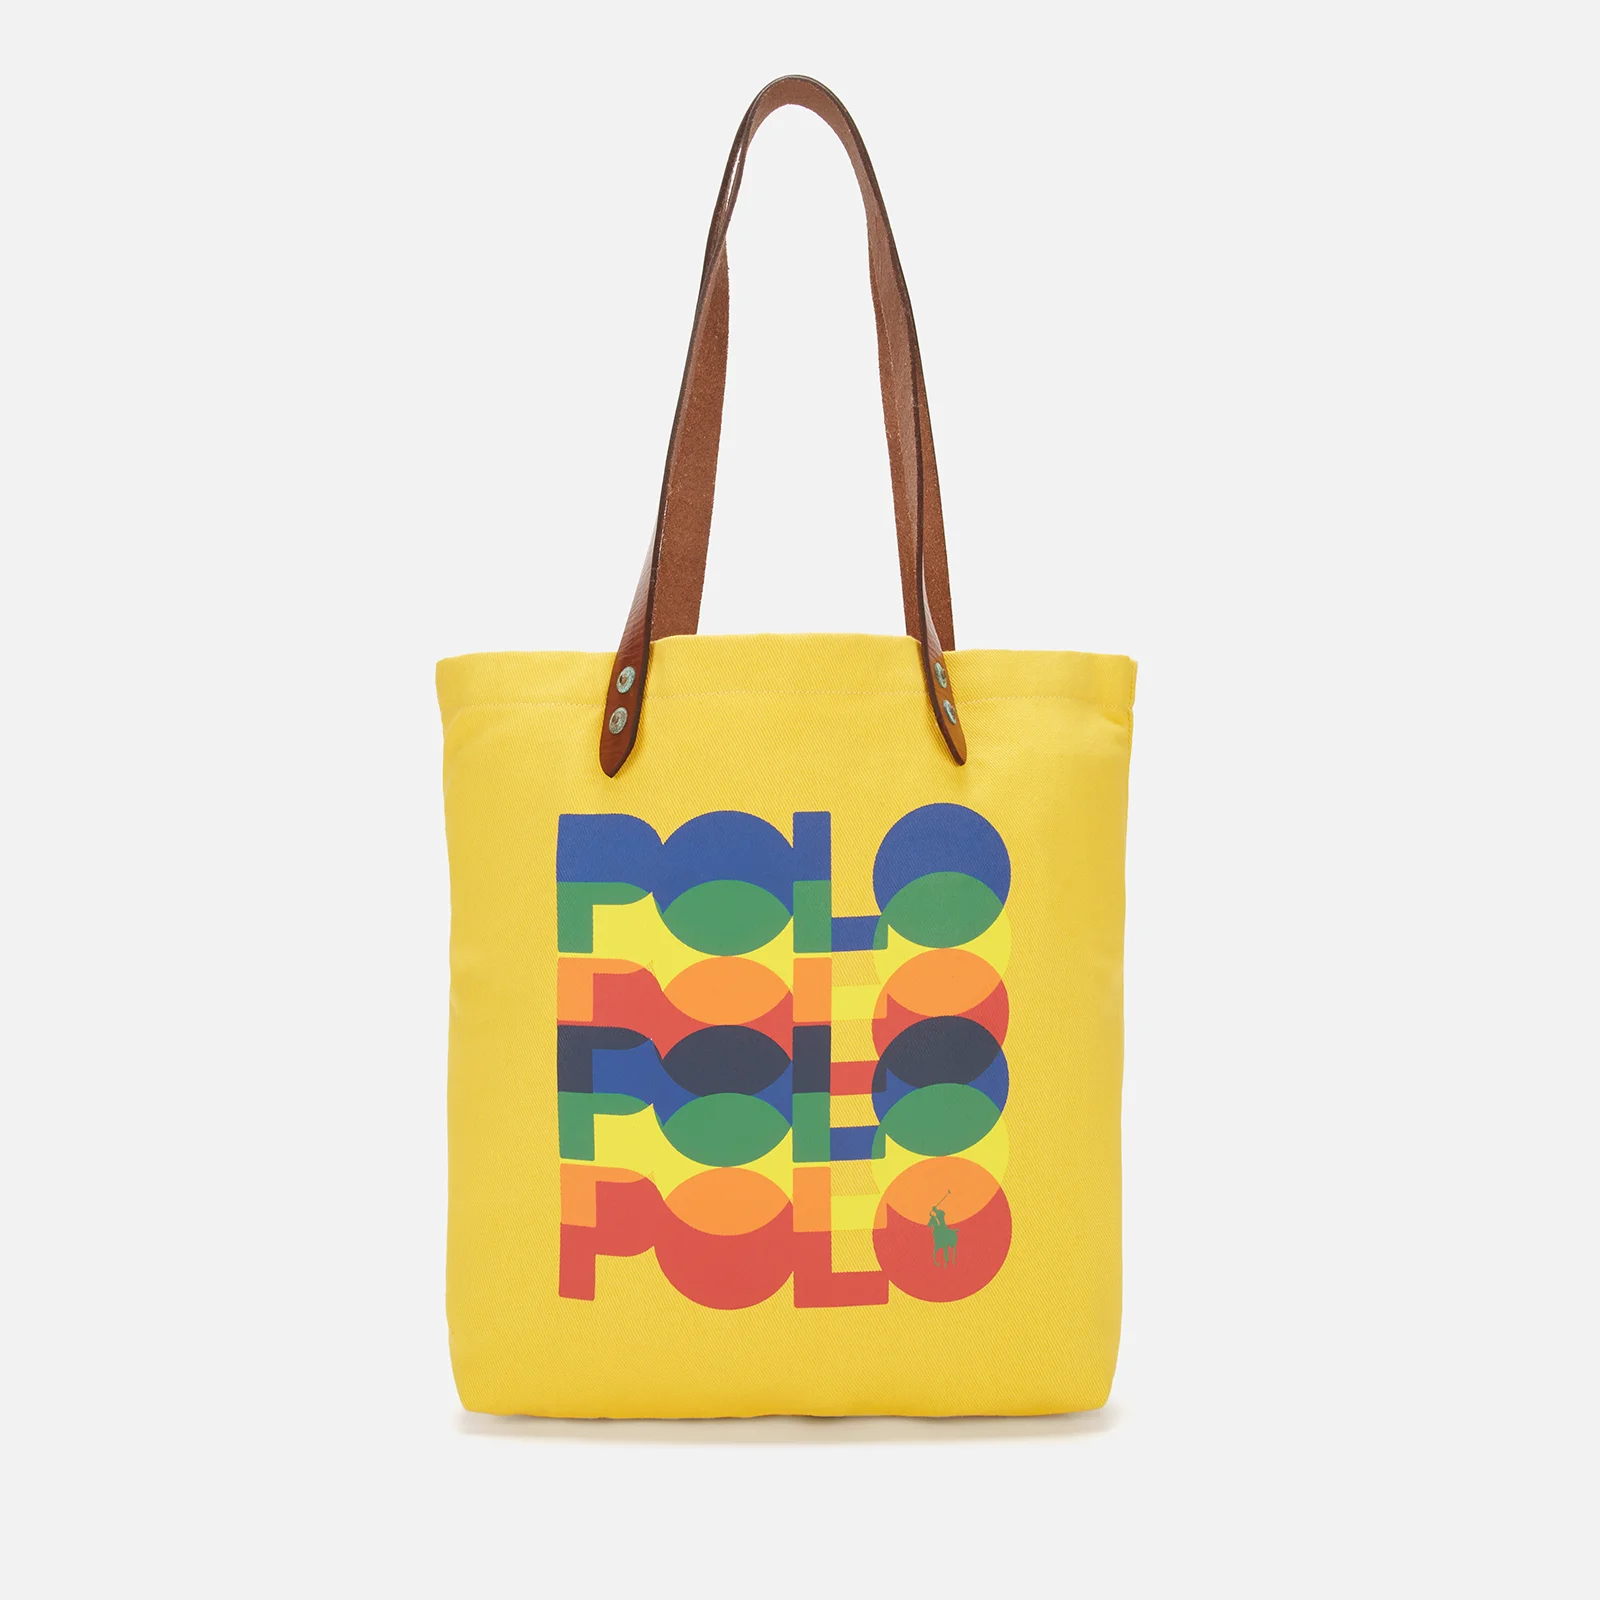 Polo Ralph Lauren Men's Cotton Canvas Tote Bag - Racing Yellow Image 1